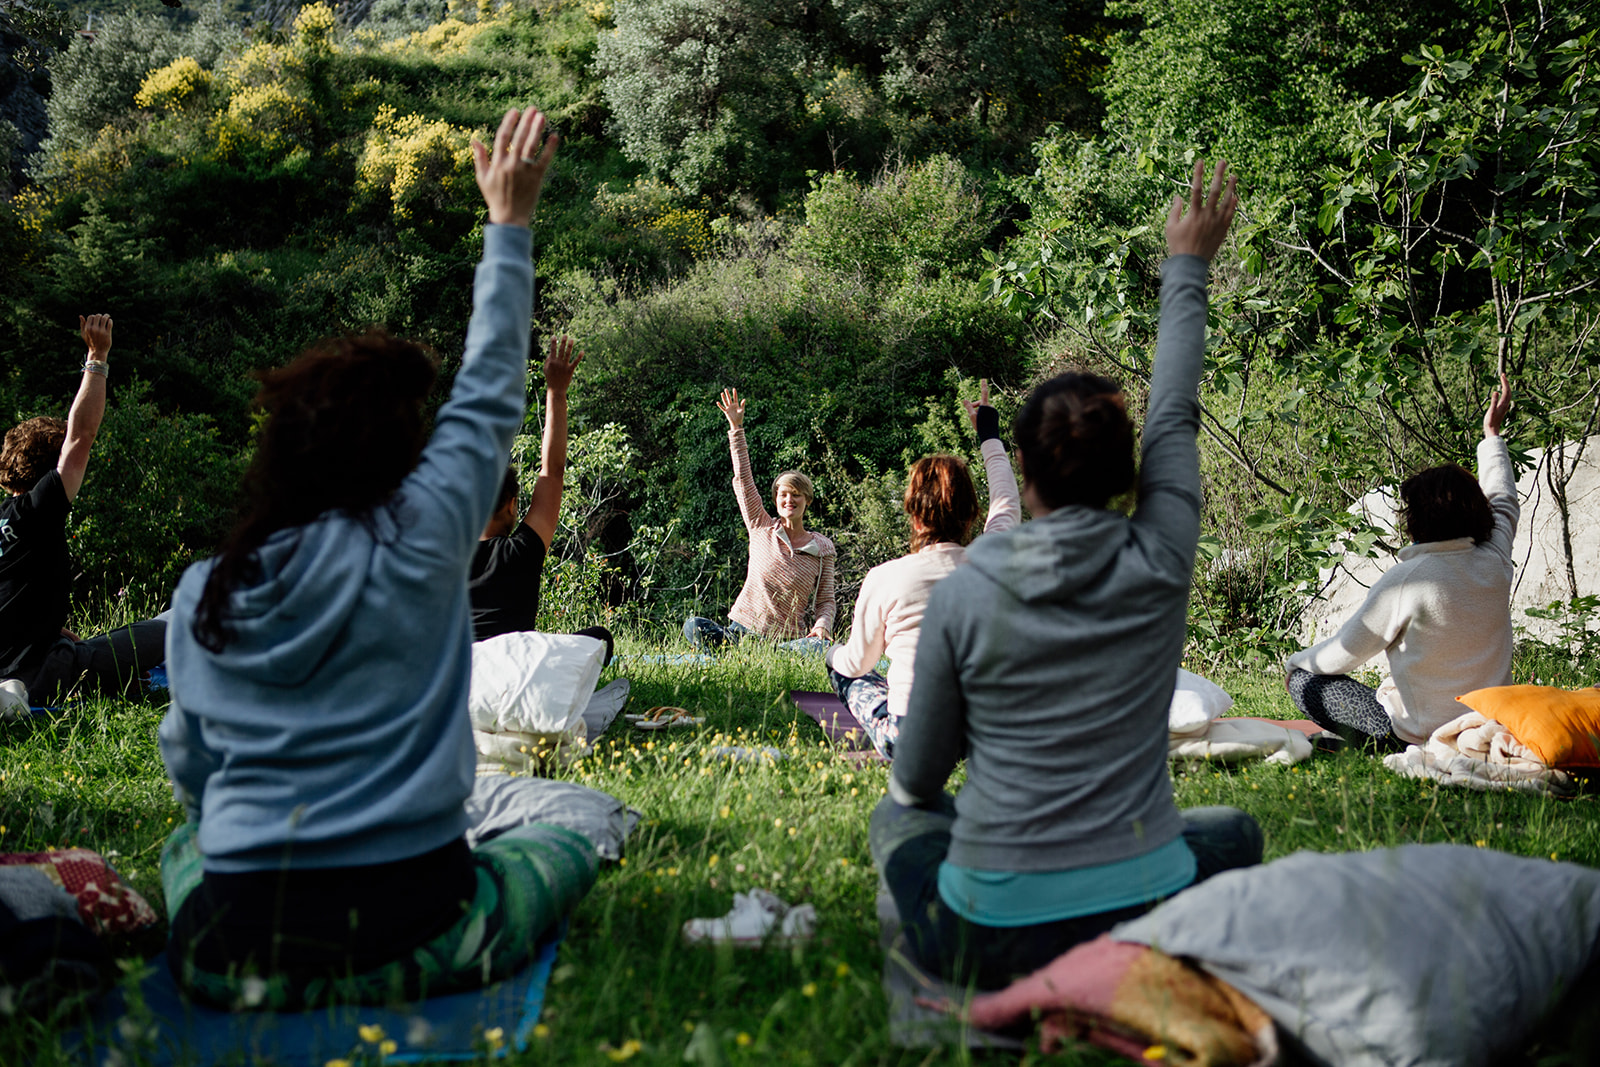 seated yoga outside on grass - hiking yoga holiday montenegro